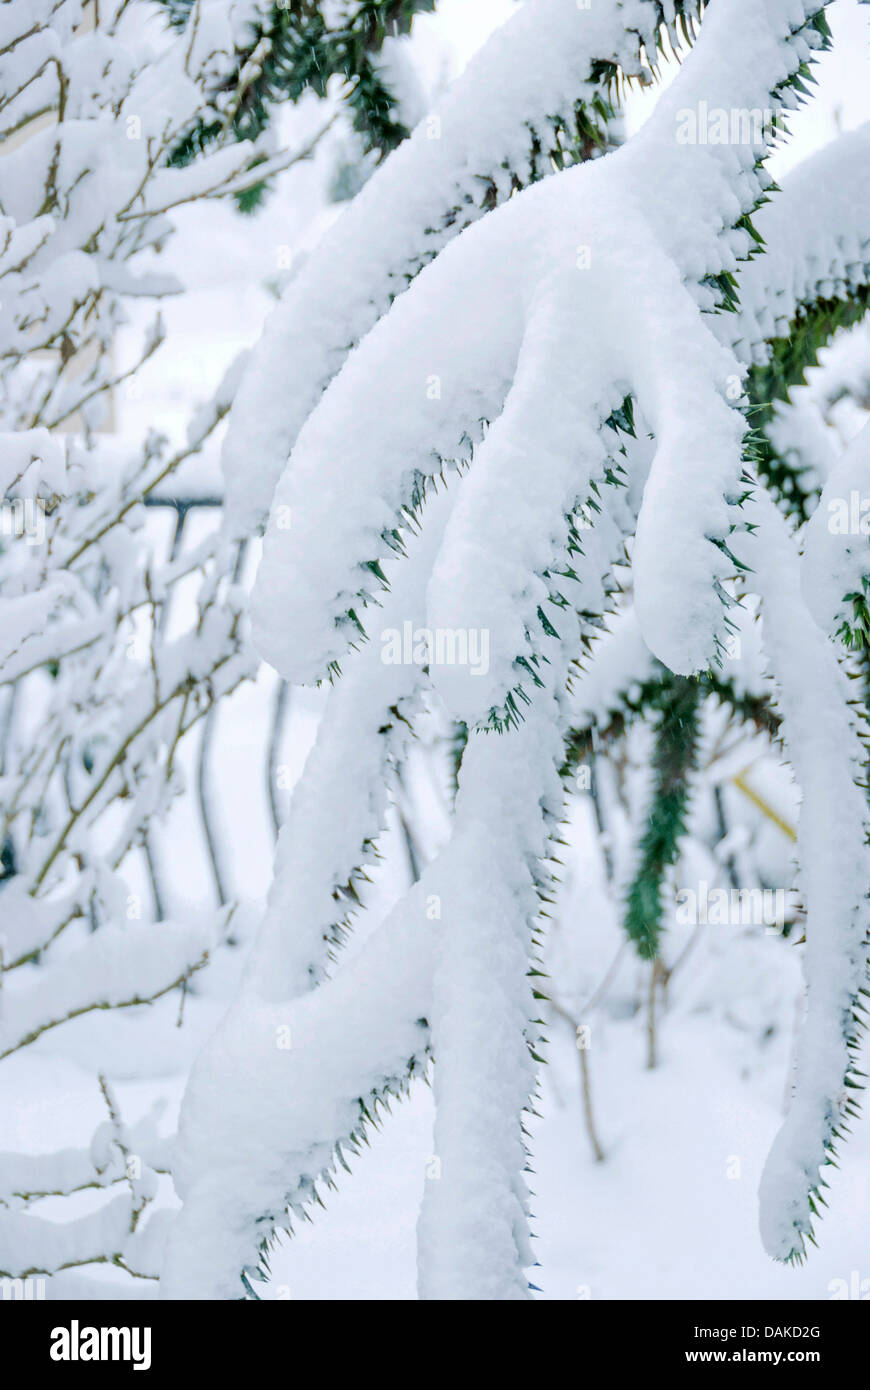 Pin du Chili (Araucaria araucana), snow-covered branches Banque D'Images